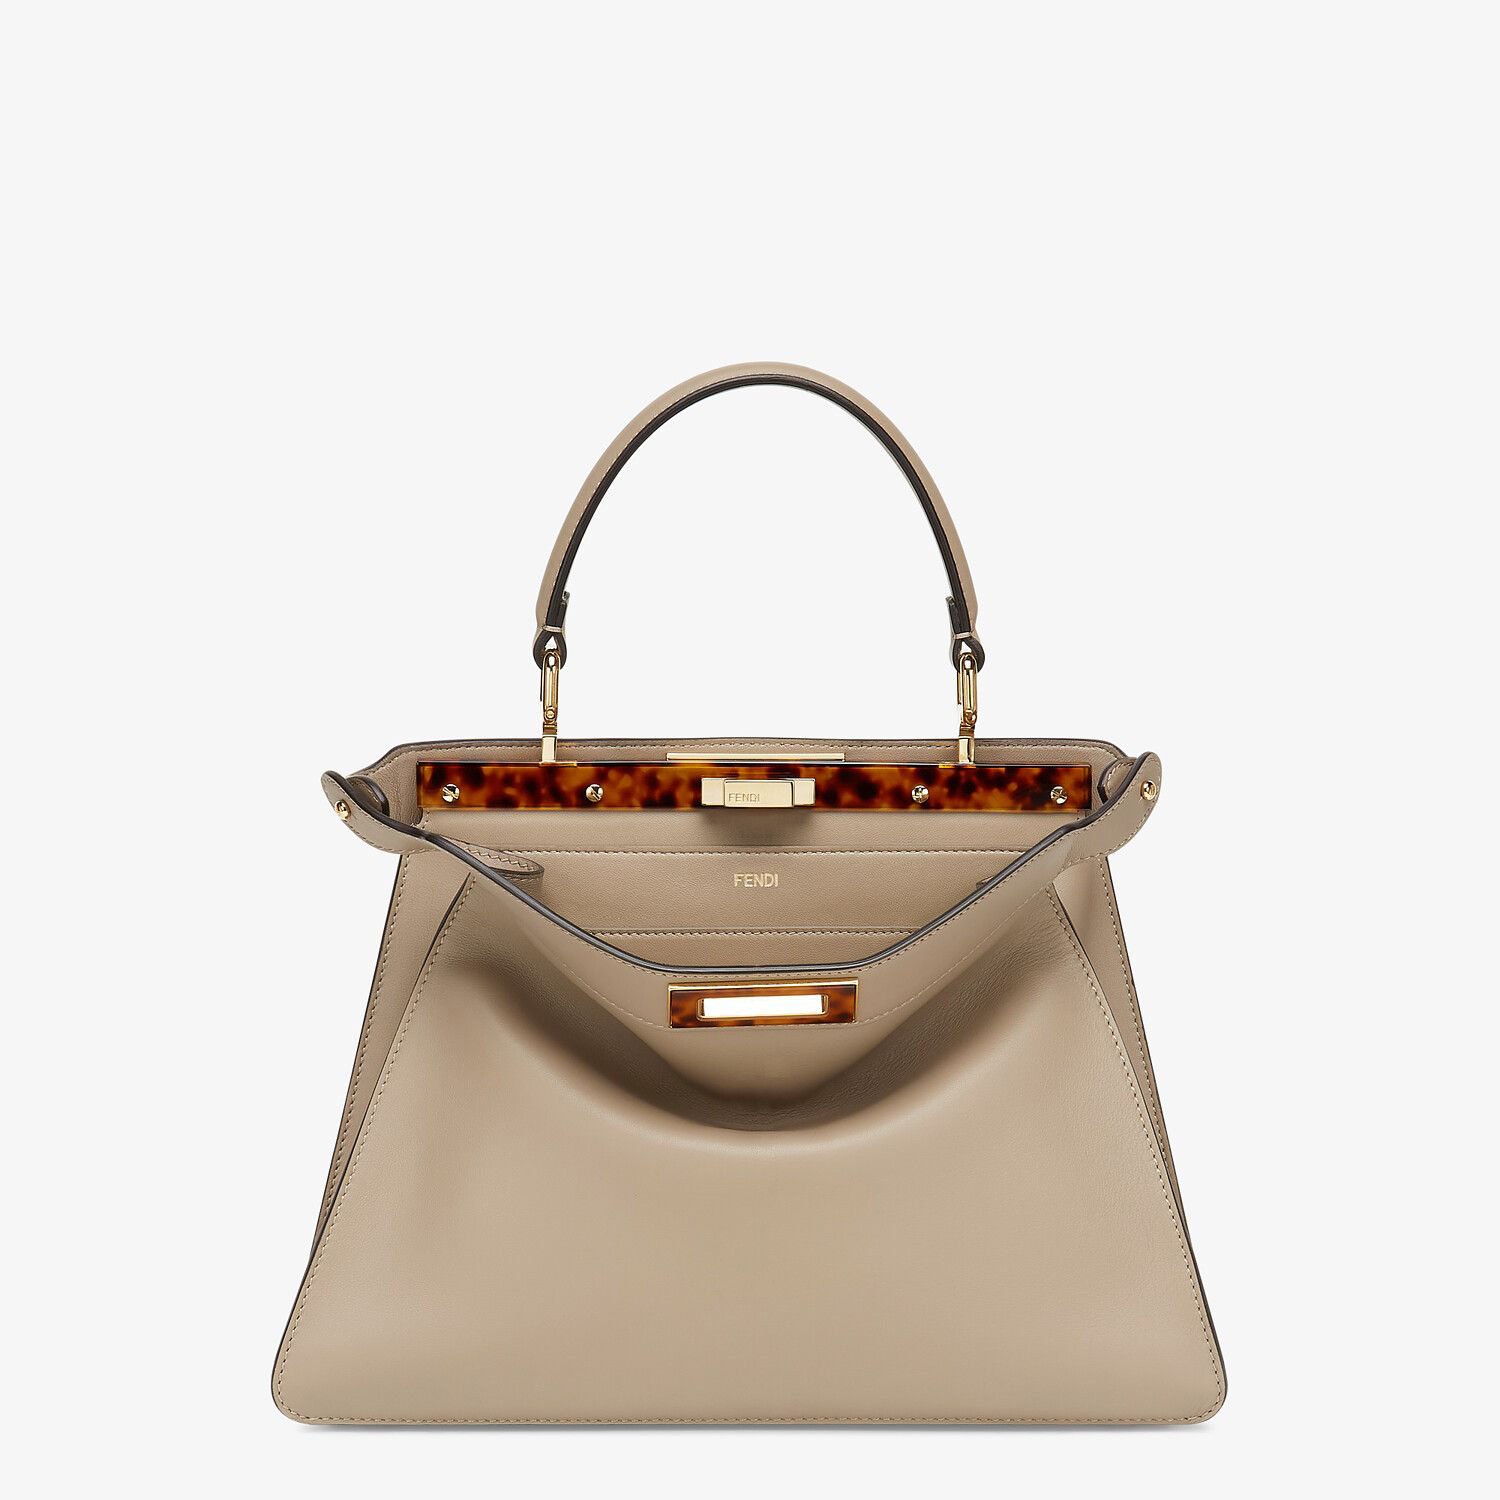 The designer handbags worth splurging on - Chaubuinet